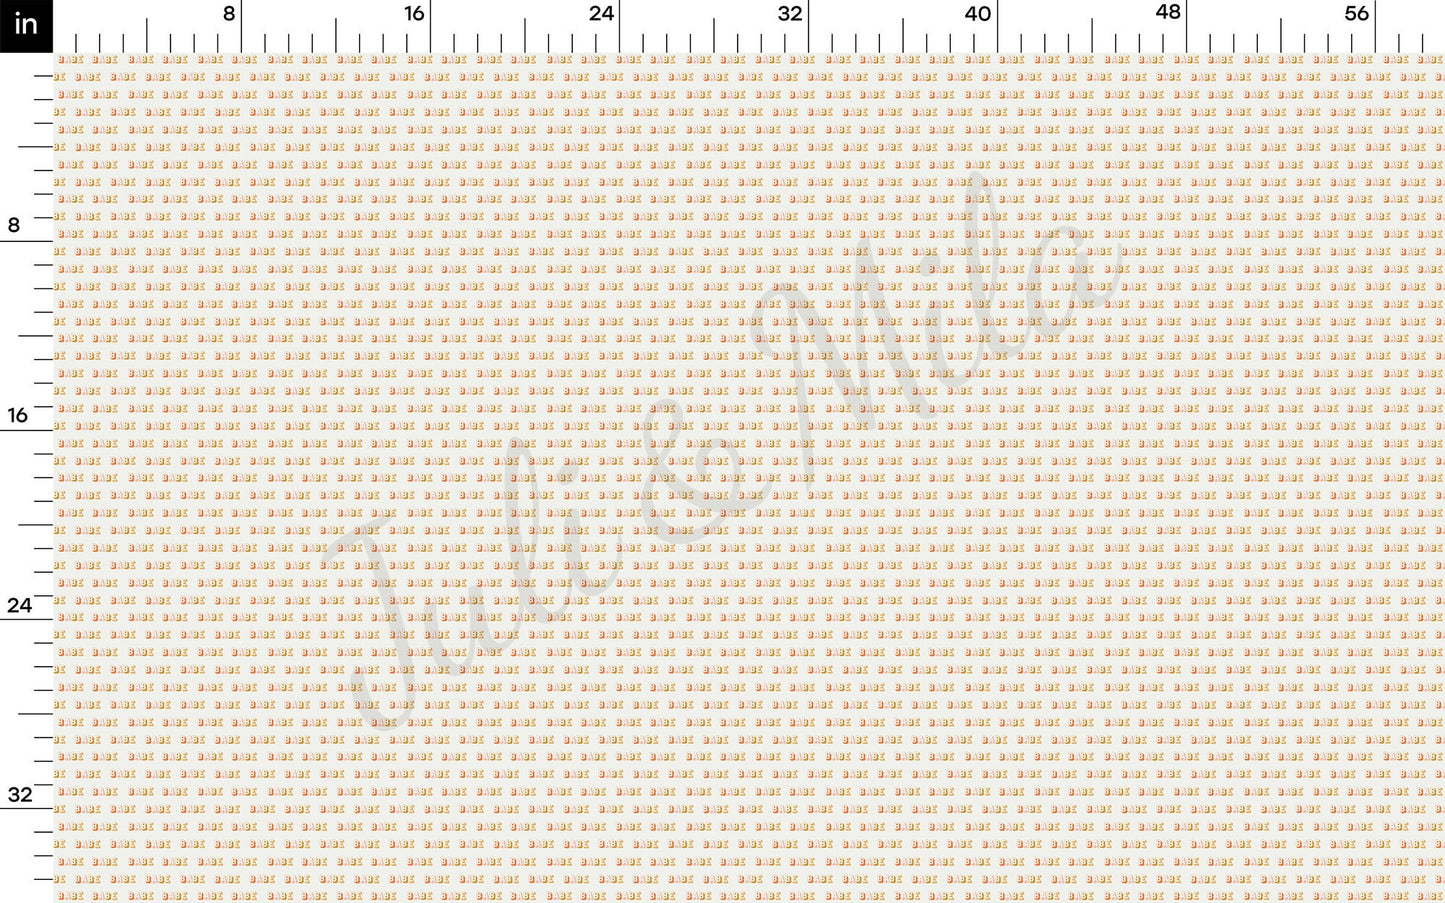 Rib Knit Fabric  RBK372